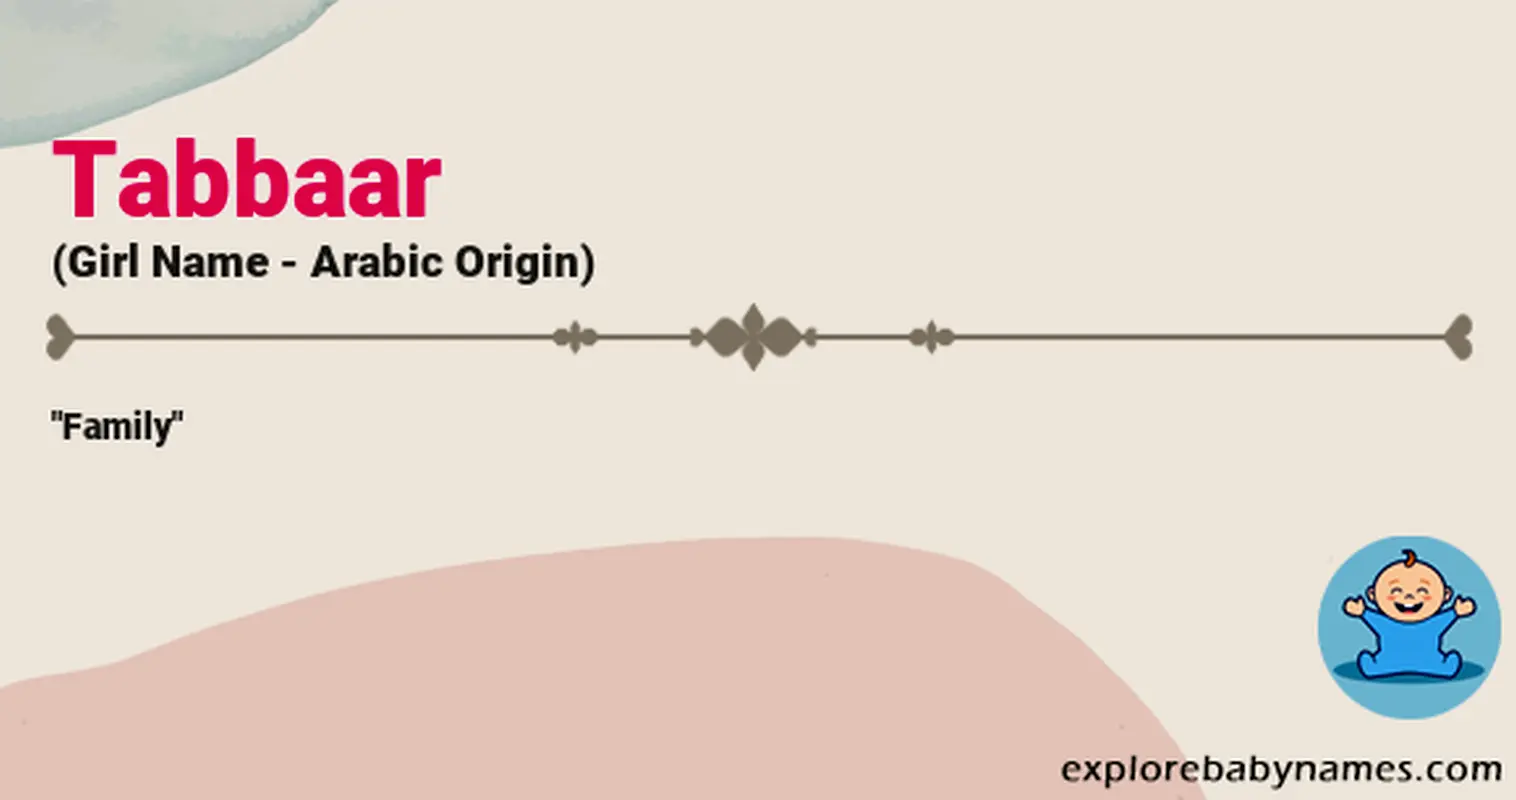 Meaning of Tabbaar